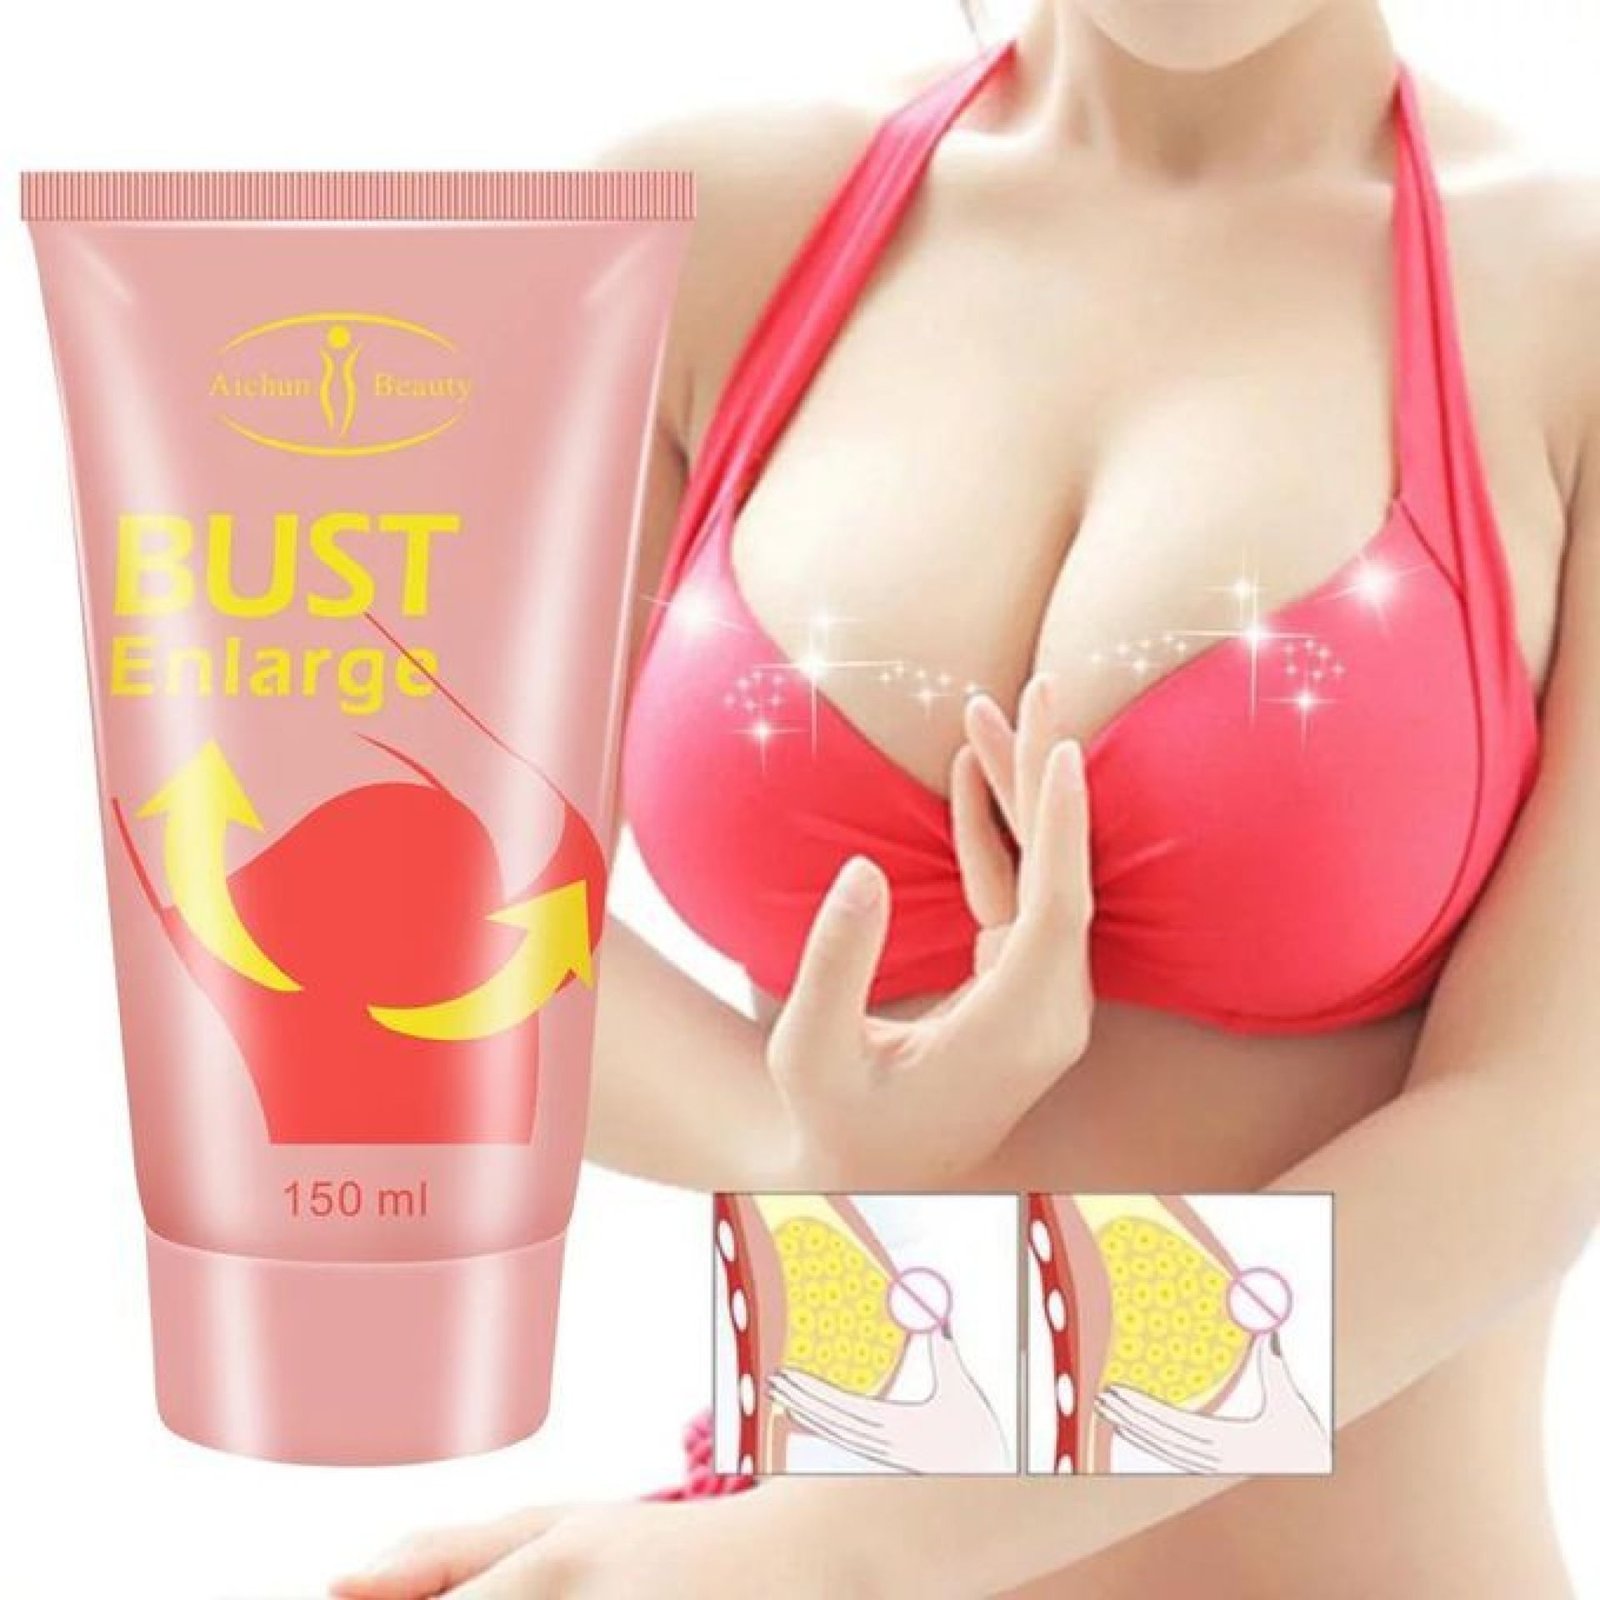 Aichun Beauty Bust Enlarge Breast Cream - 150ml